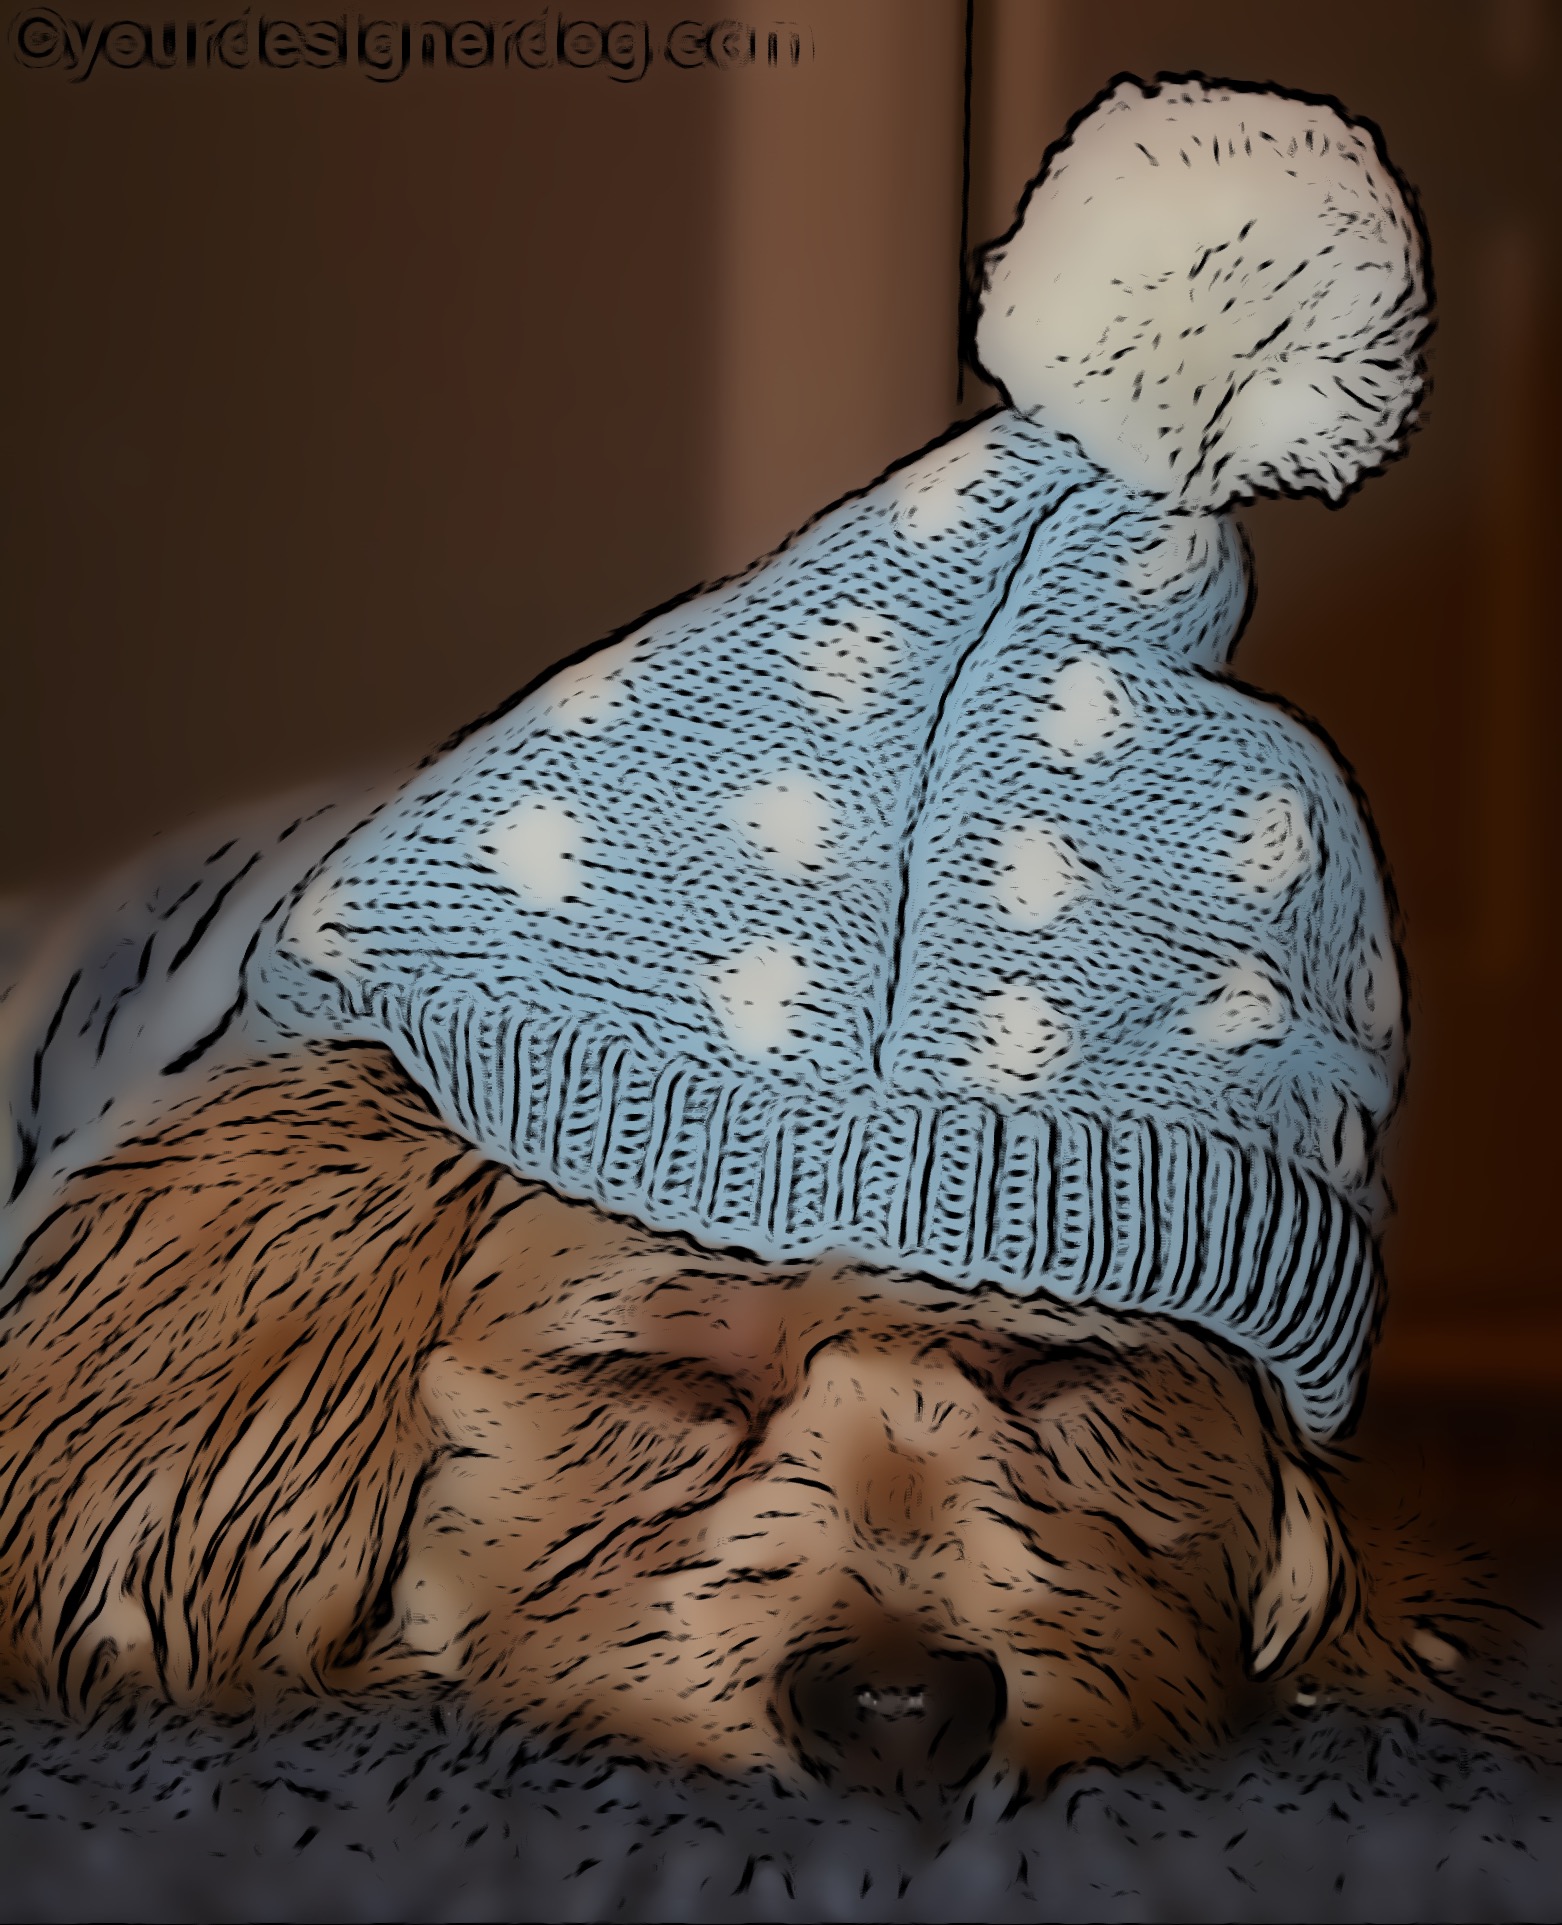 dogs, designer dogs, Yorkipoo, yorkie poo, sleepy puppy, digital art, pet portrait, winter hat